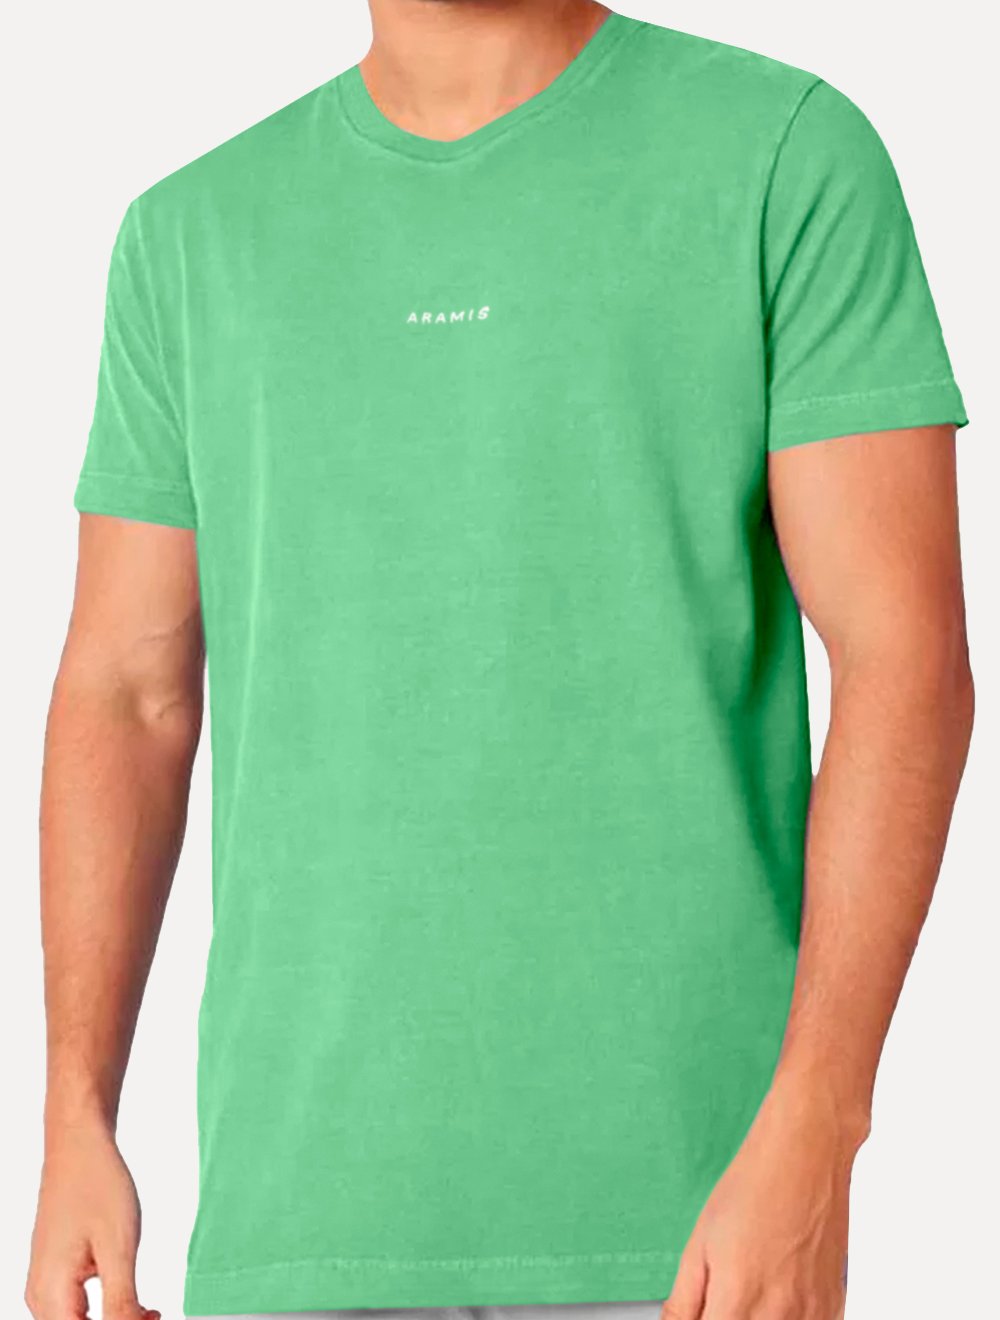 Camiseta Aramis Masculina Estampa Costas Barcode Cacto Verde Mescla